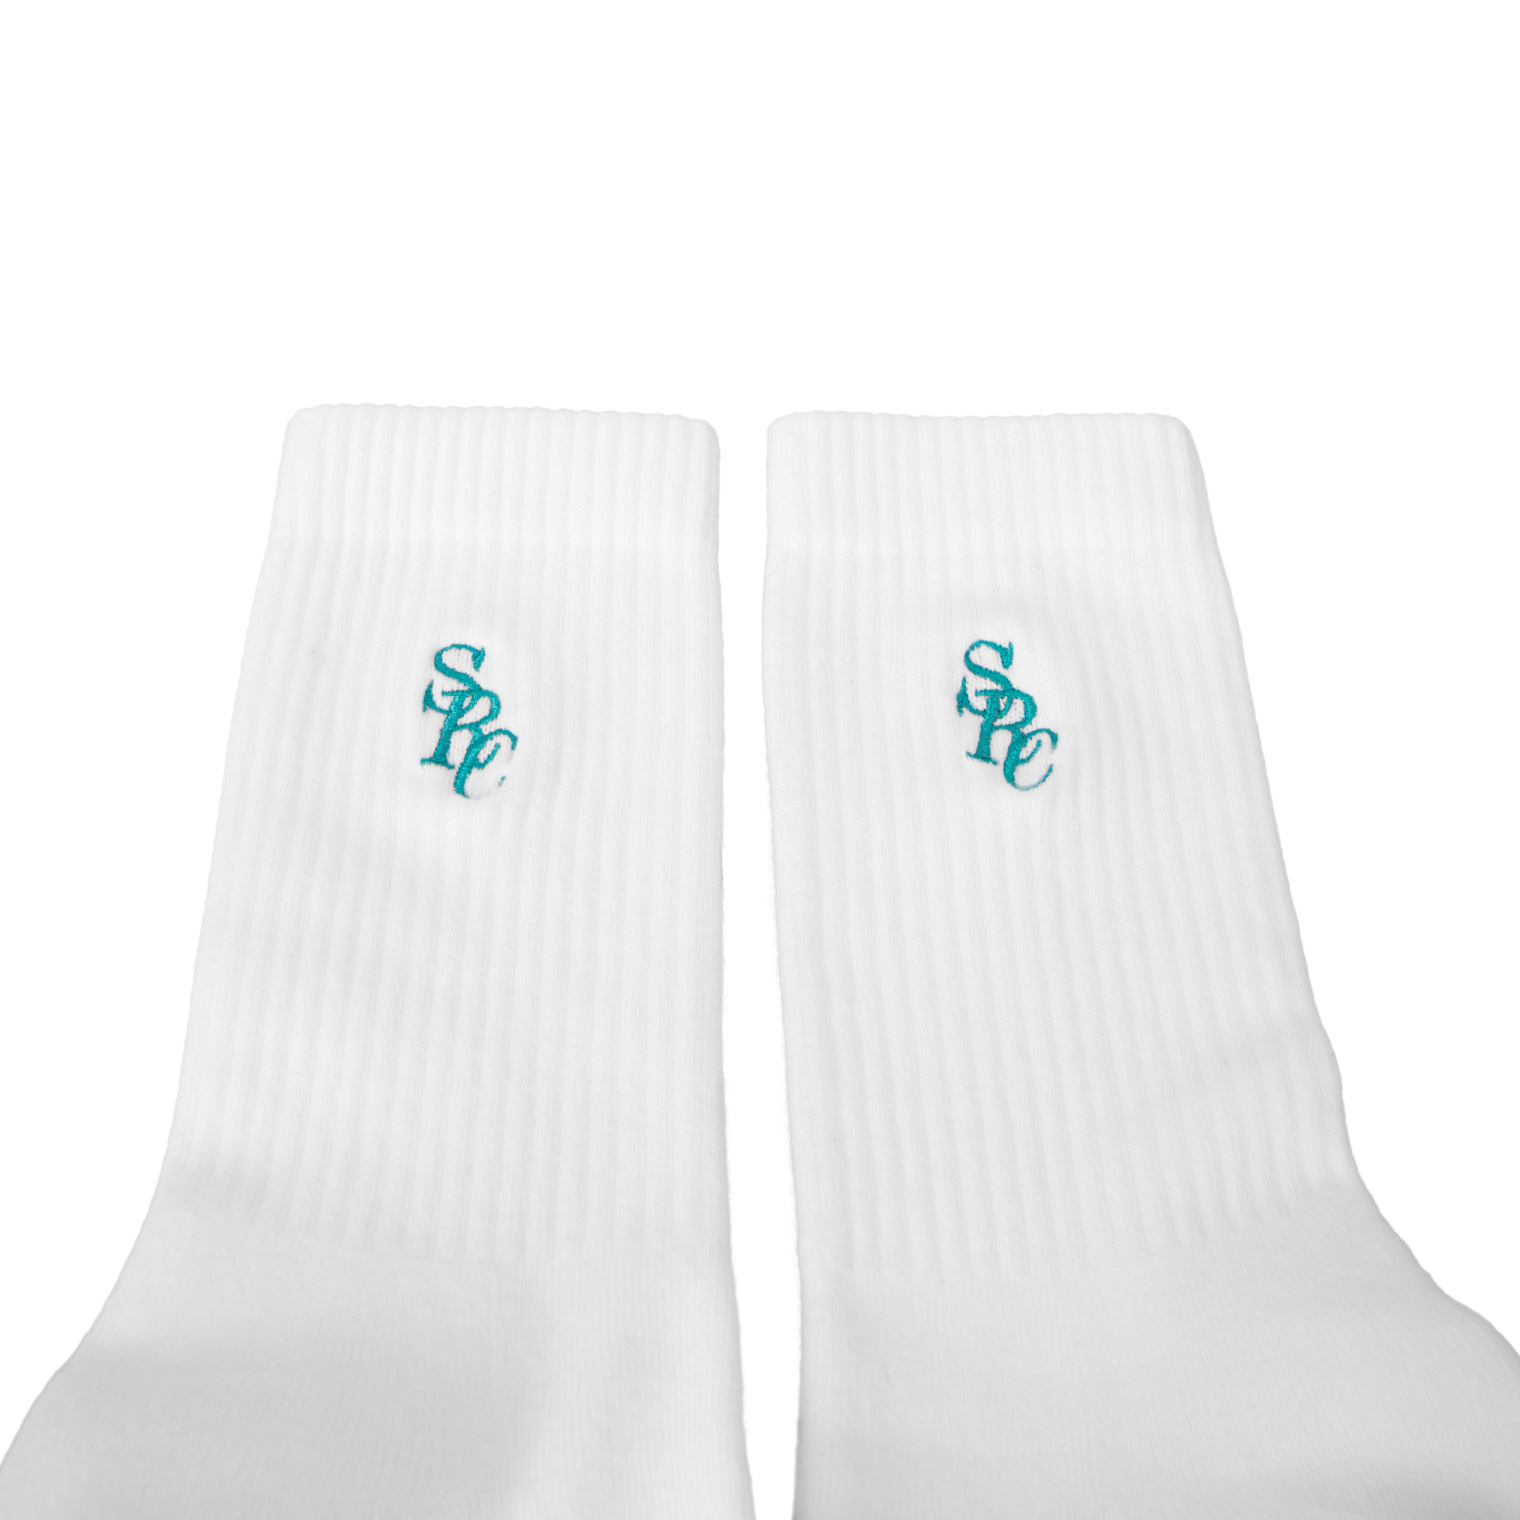 SPORTY & RICH SRC embroidered logo socks